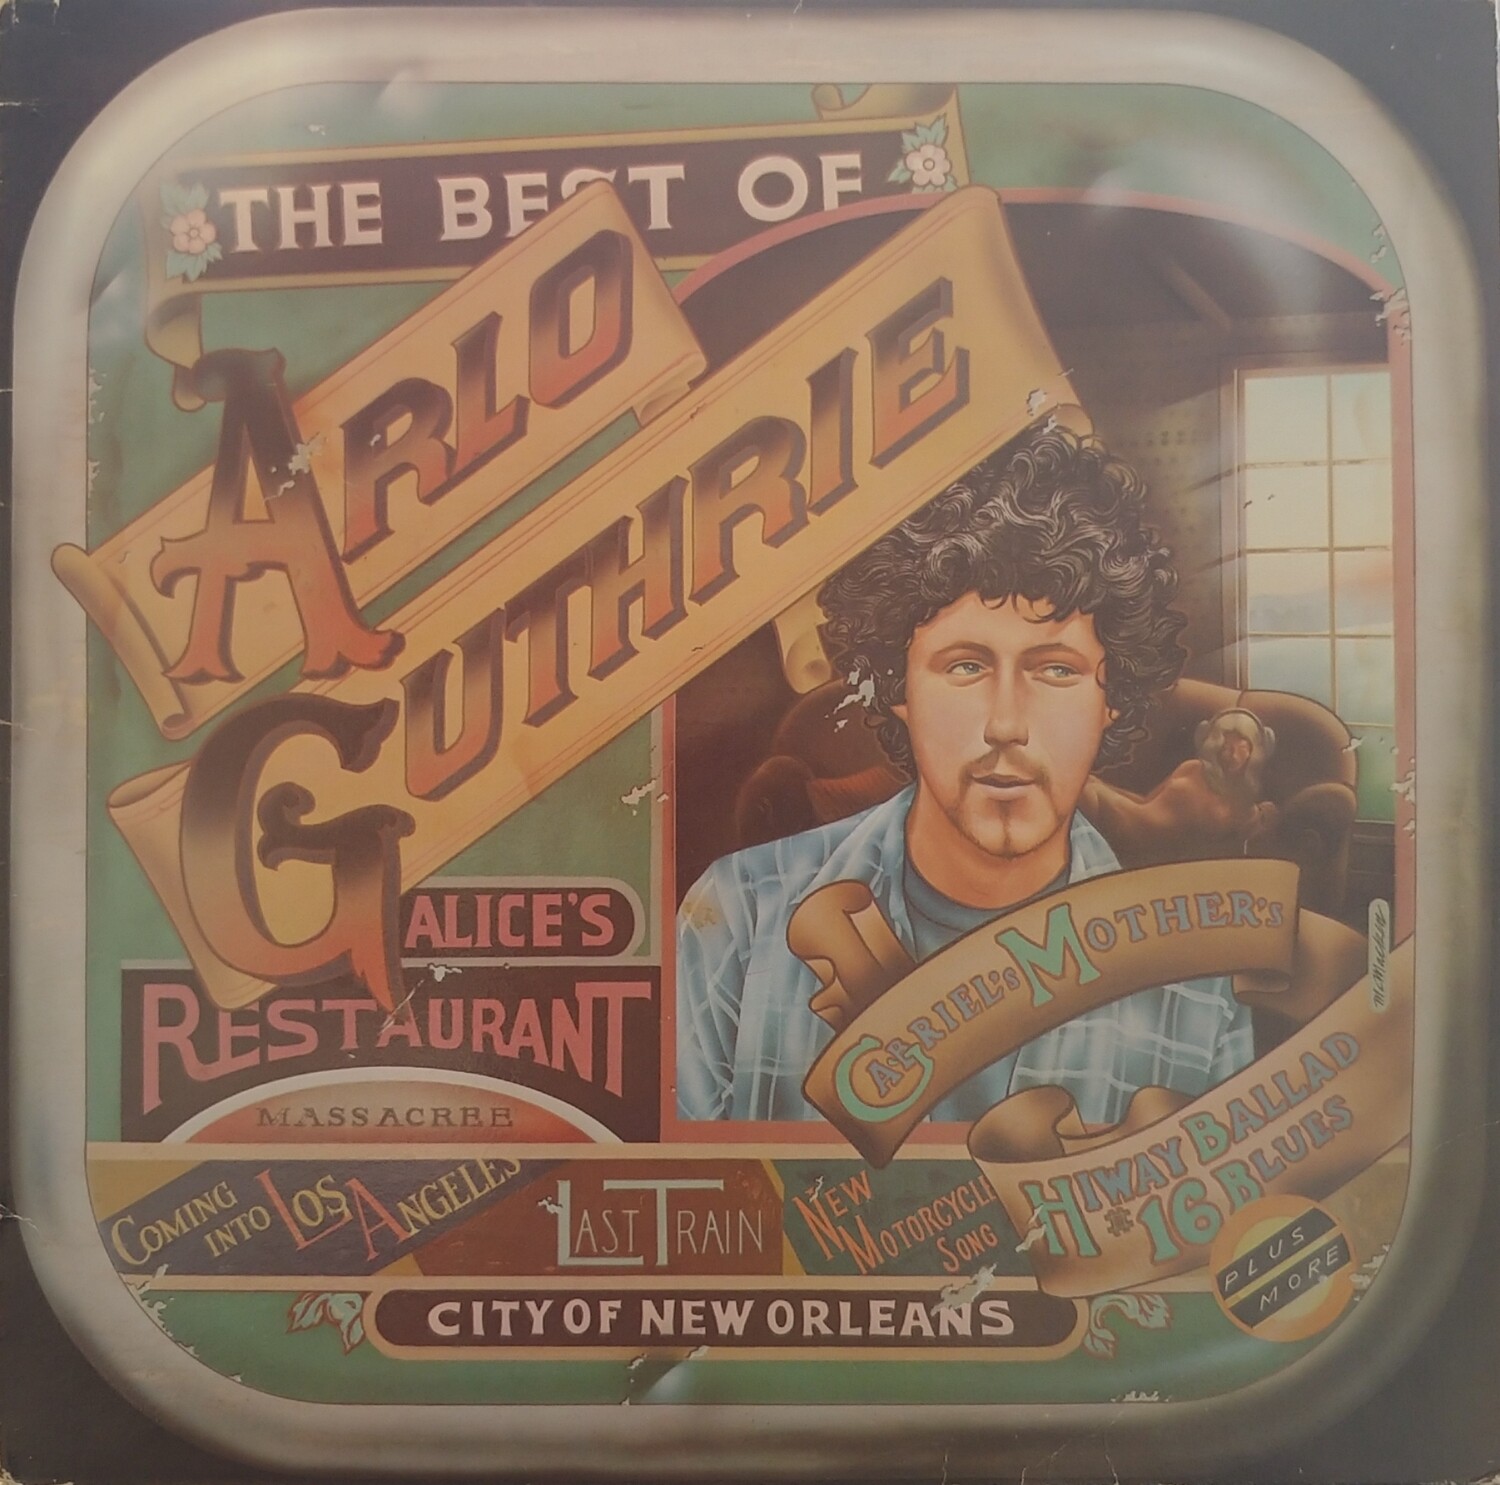 Arlo Guthrie - The best of Arlo Guthrie